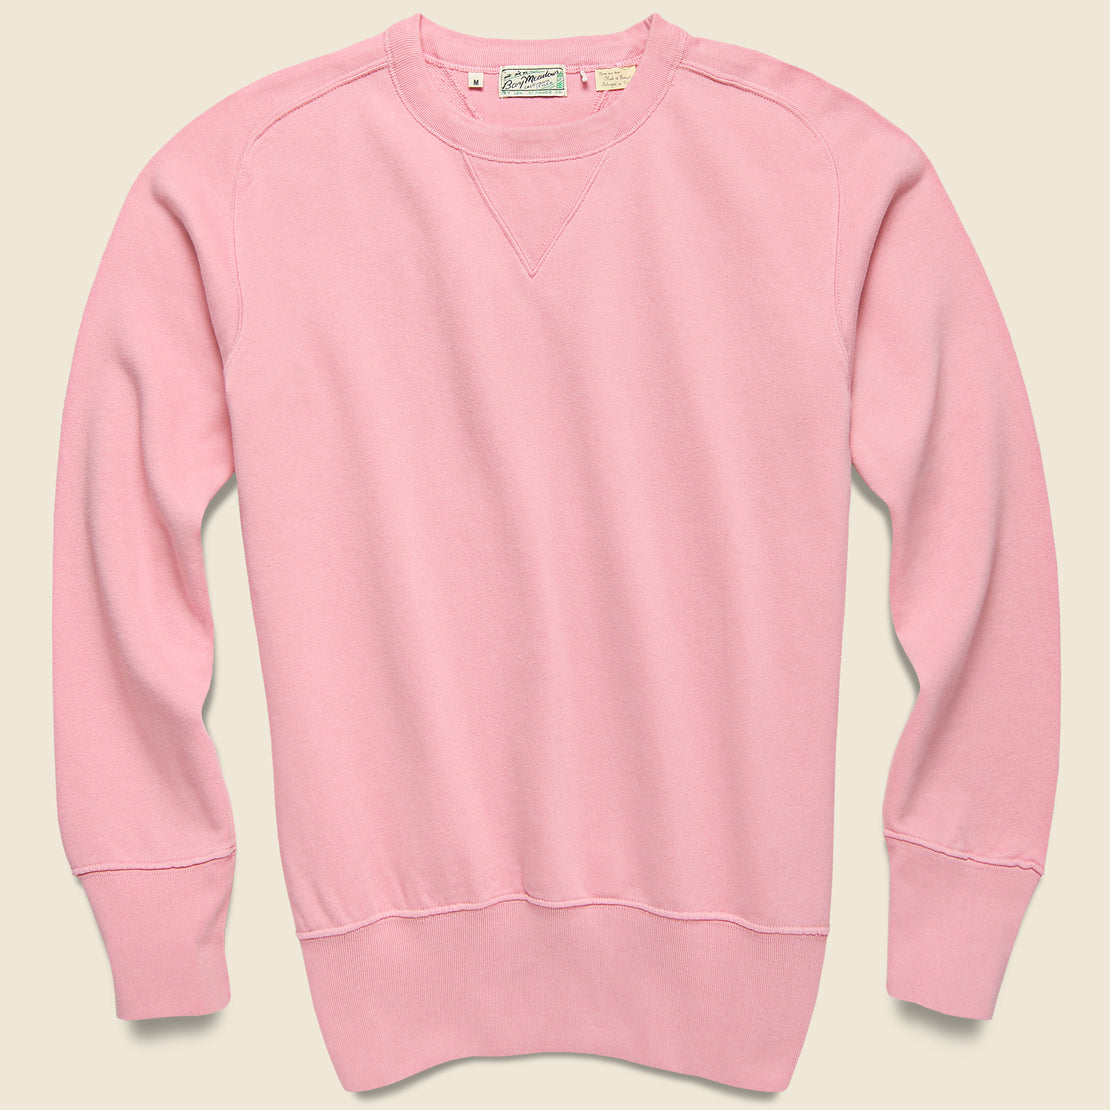 Levis Vintage Clothing Bay Meadows Sweatshirt - Cotton Candy